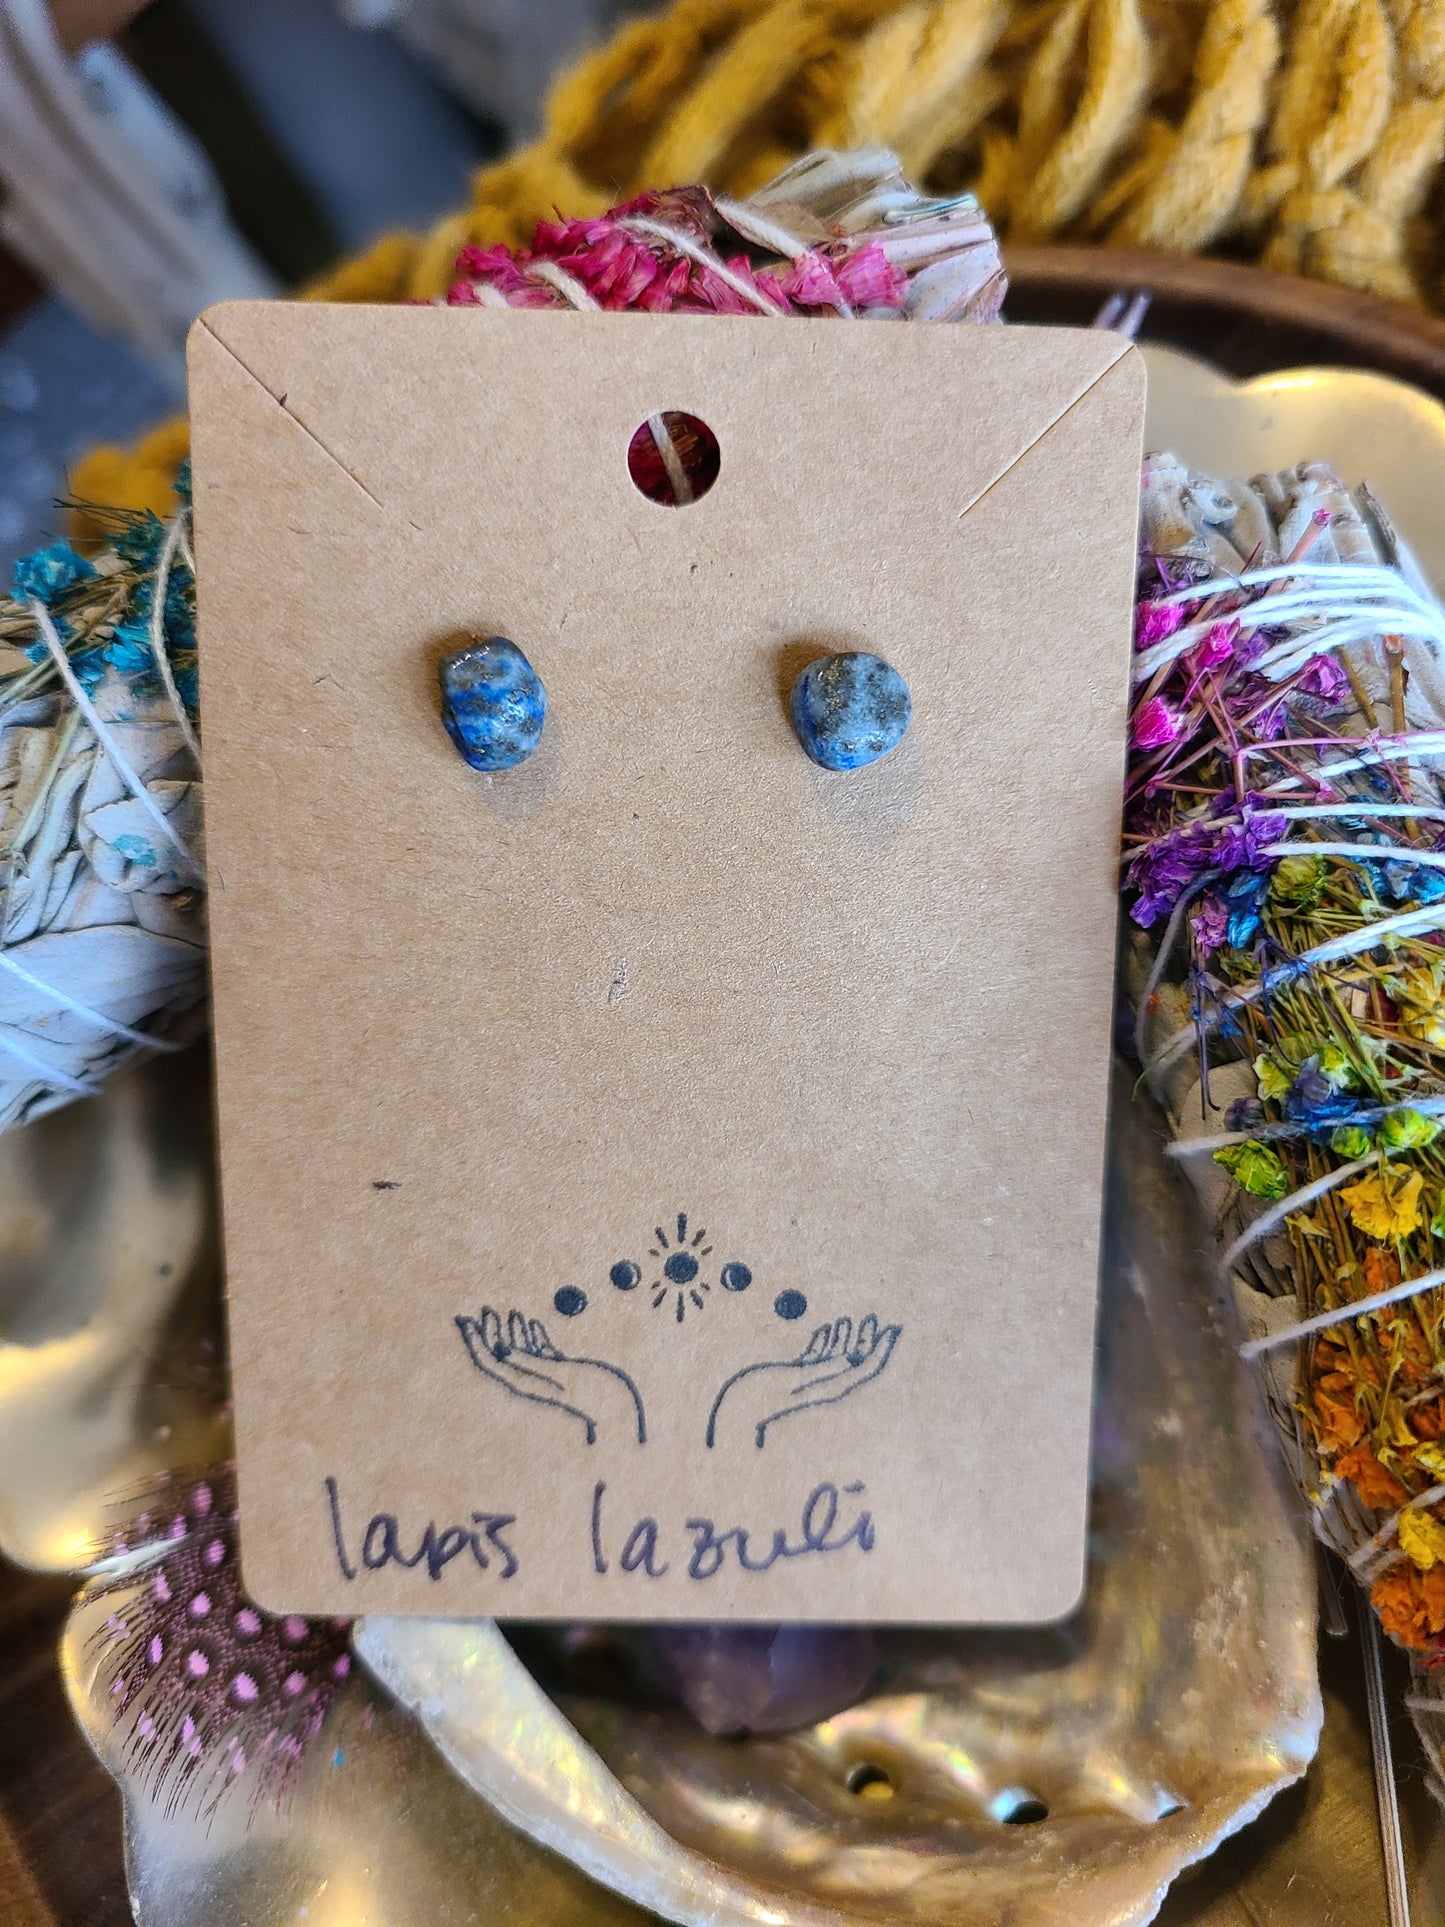 Natural Lapis Lazuli Stud Earrings